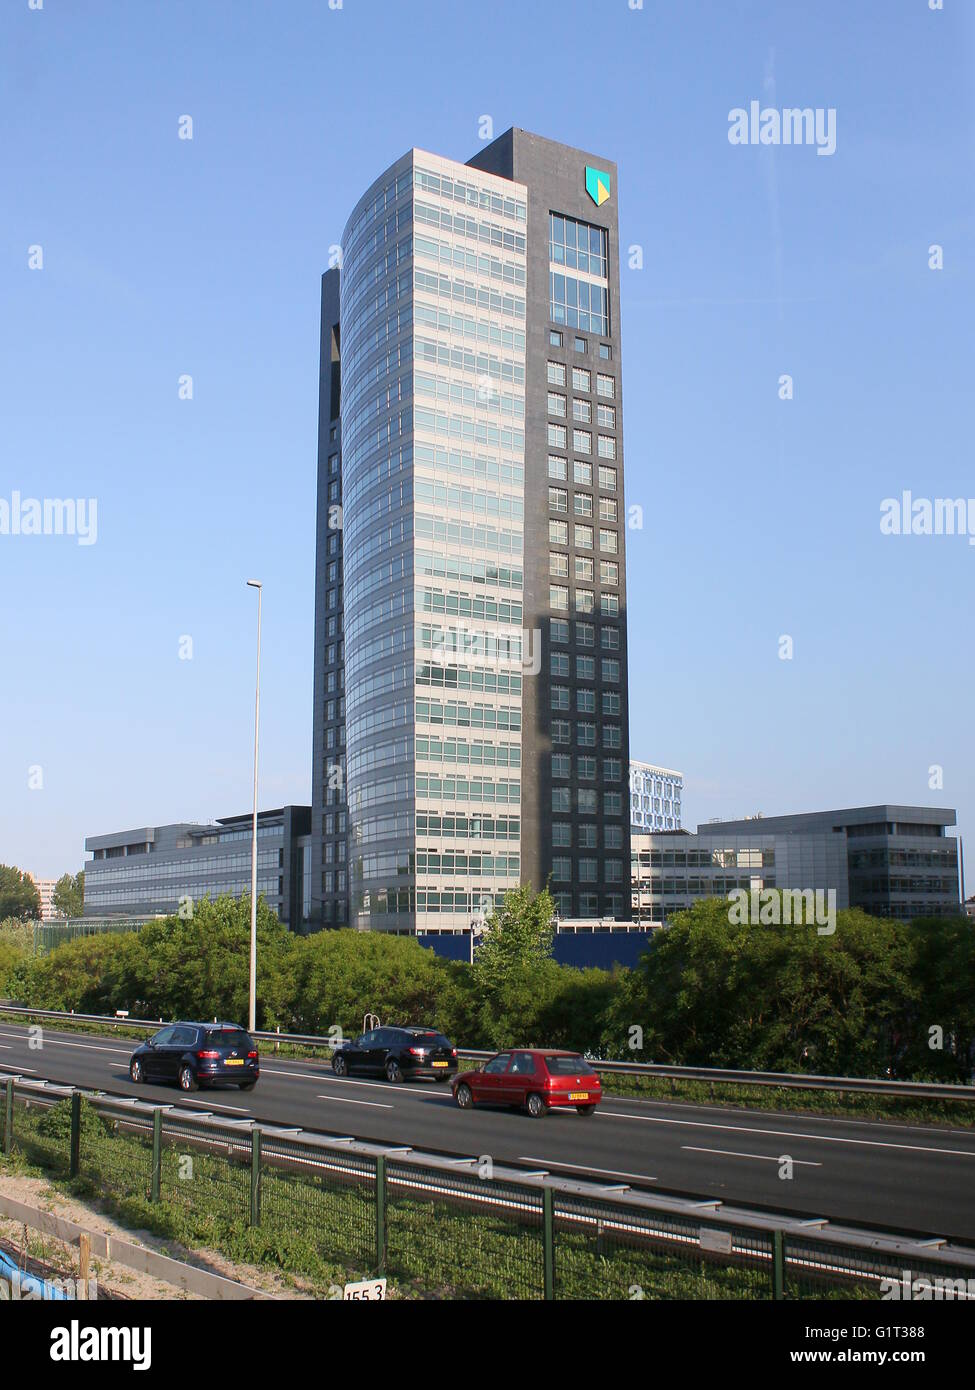 ABN Amro Bank Headquarters, Amsterdam Zuidas financial district, Amsterdam  South, Netherlands Stock Photo - Alamy